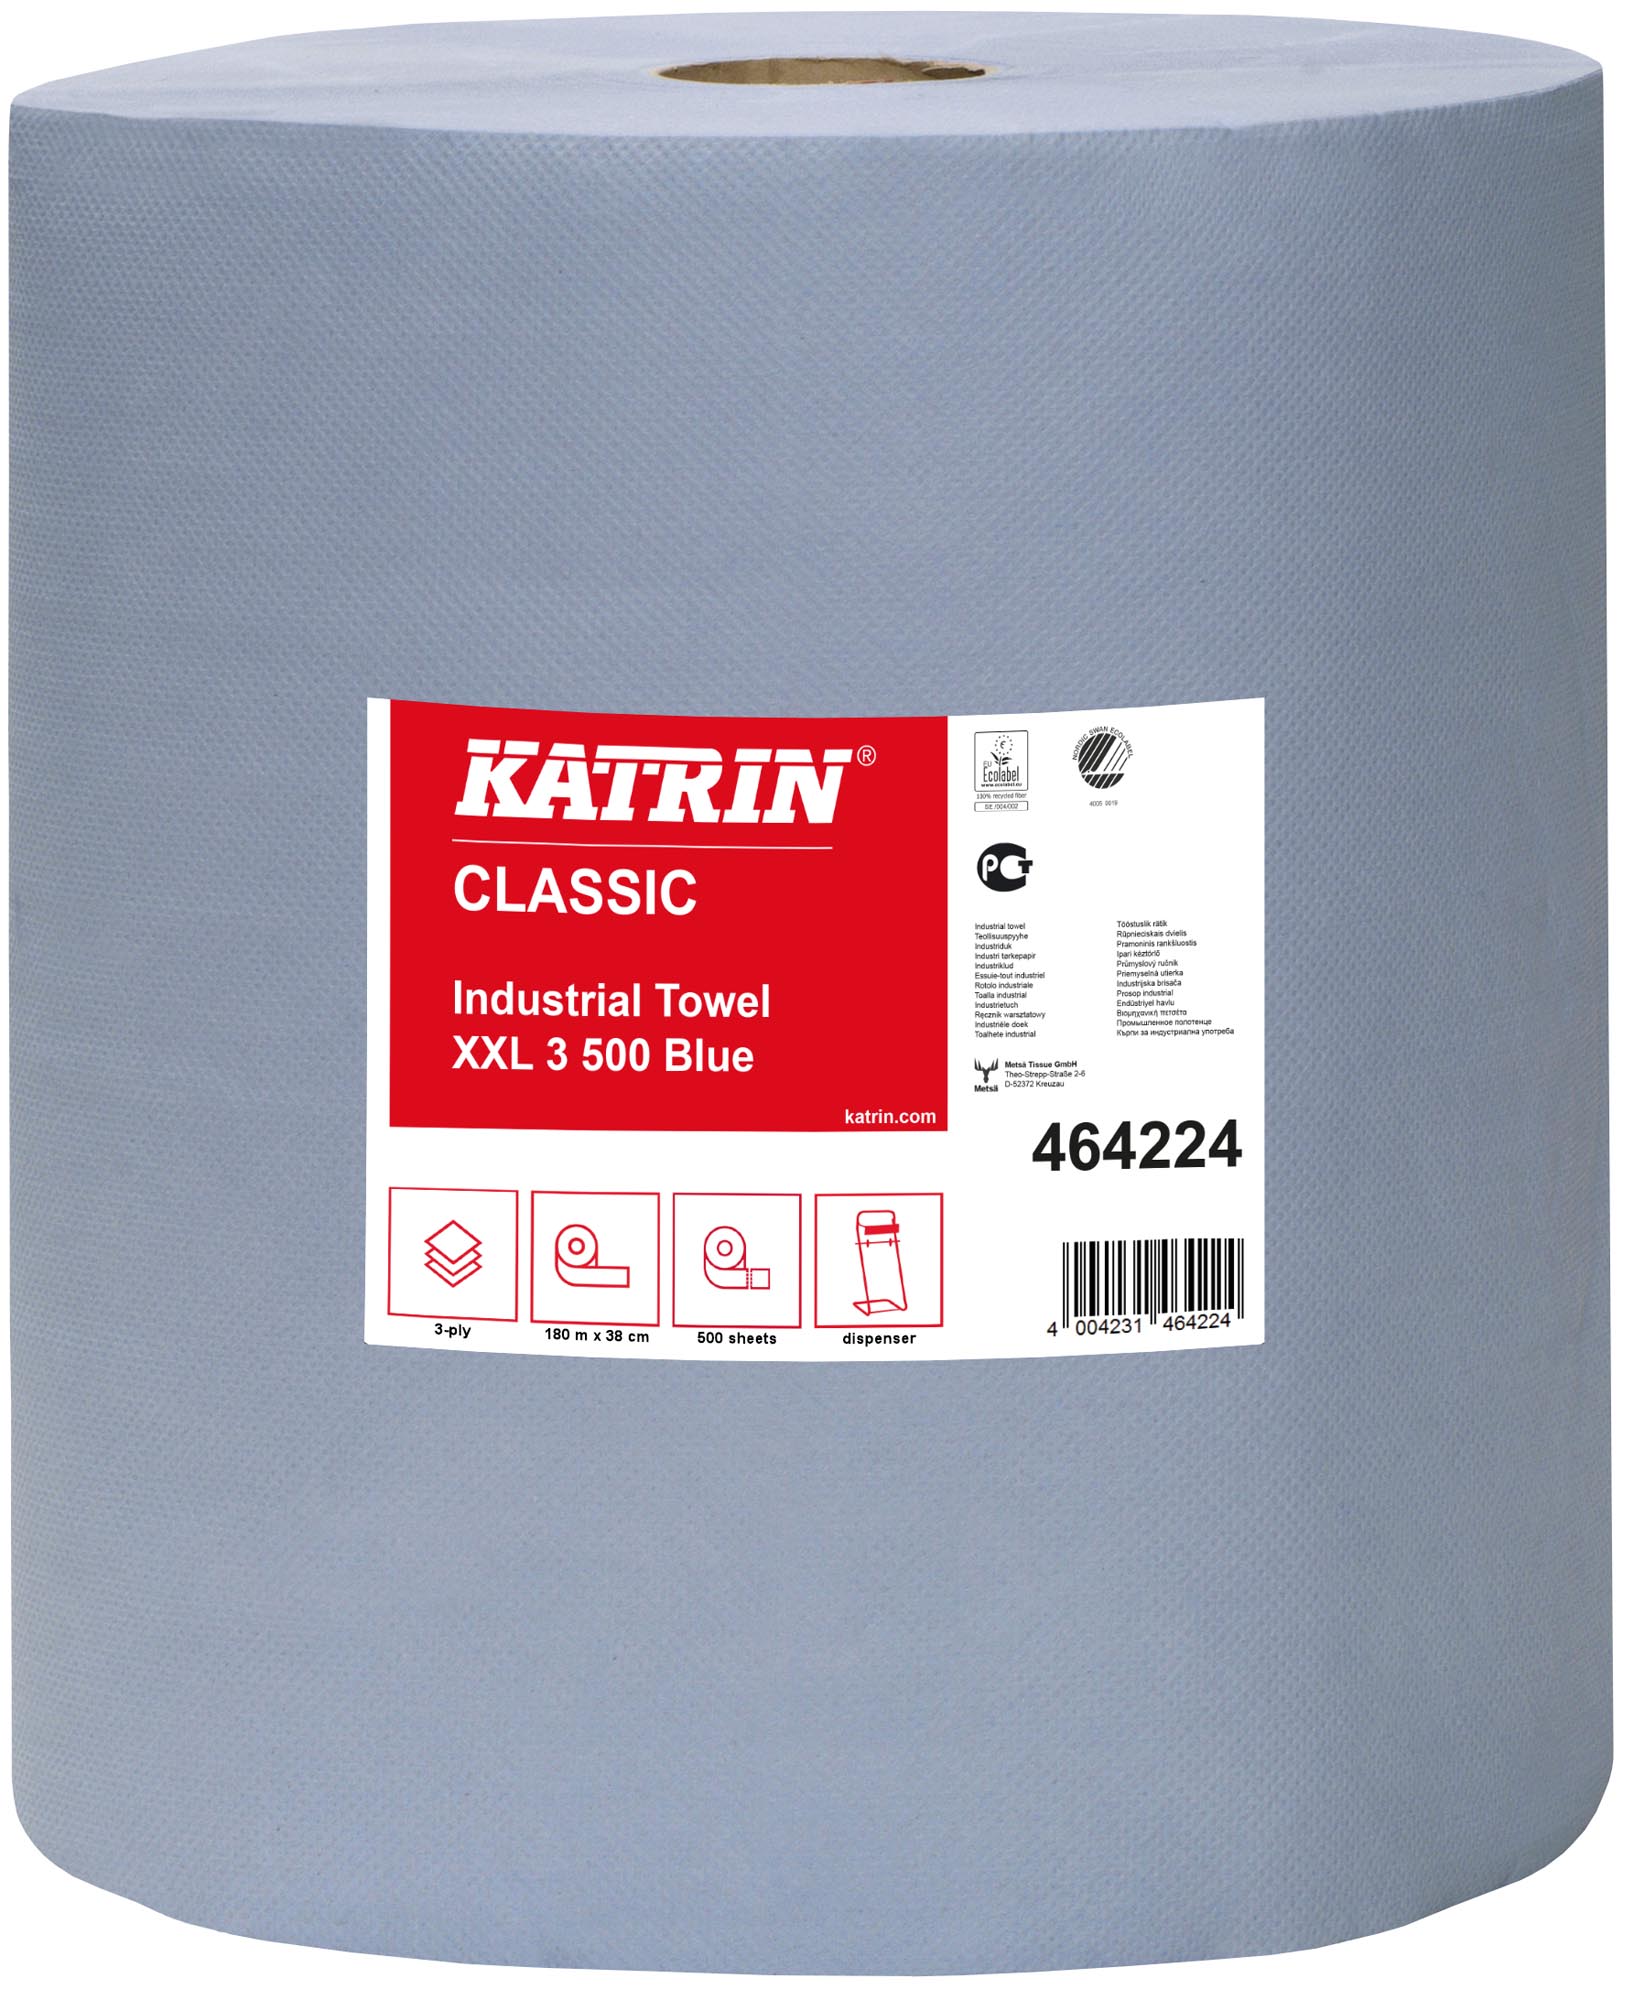 Katrin Classic Industrial Towel XXL3, Blue 500 Laminated